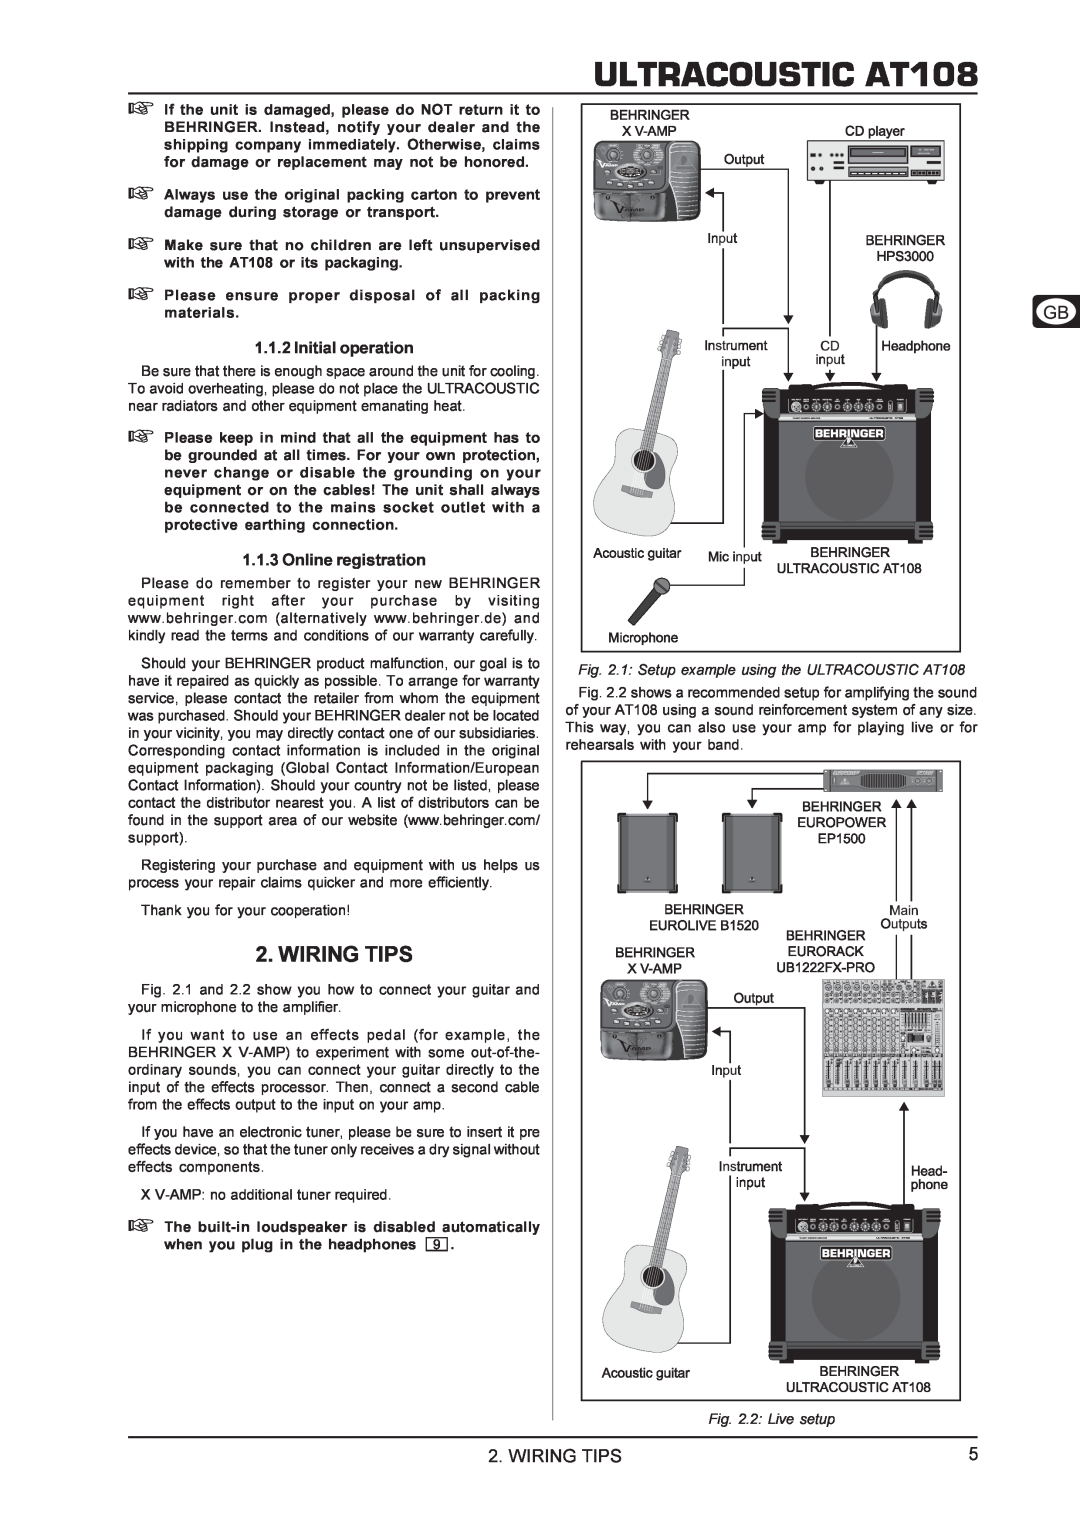 Behringer manual Wiring Tips, ULTRACOUSTIC AT108, 2 Live setup 